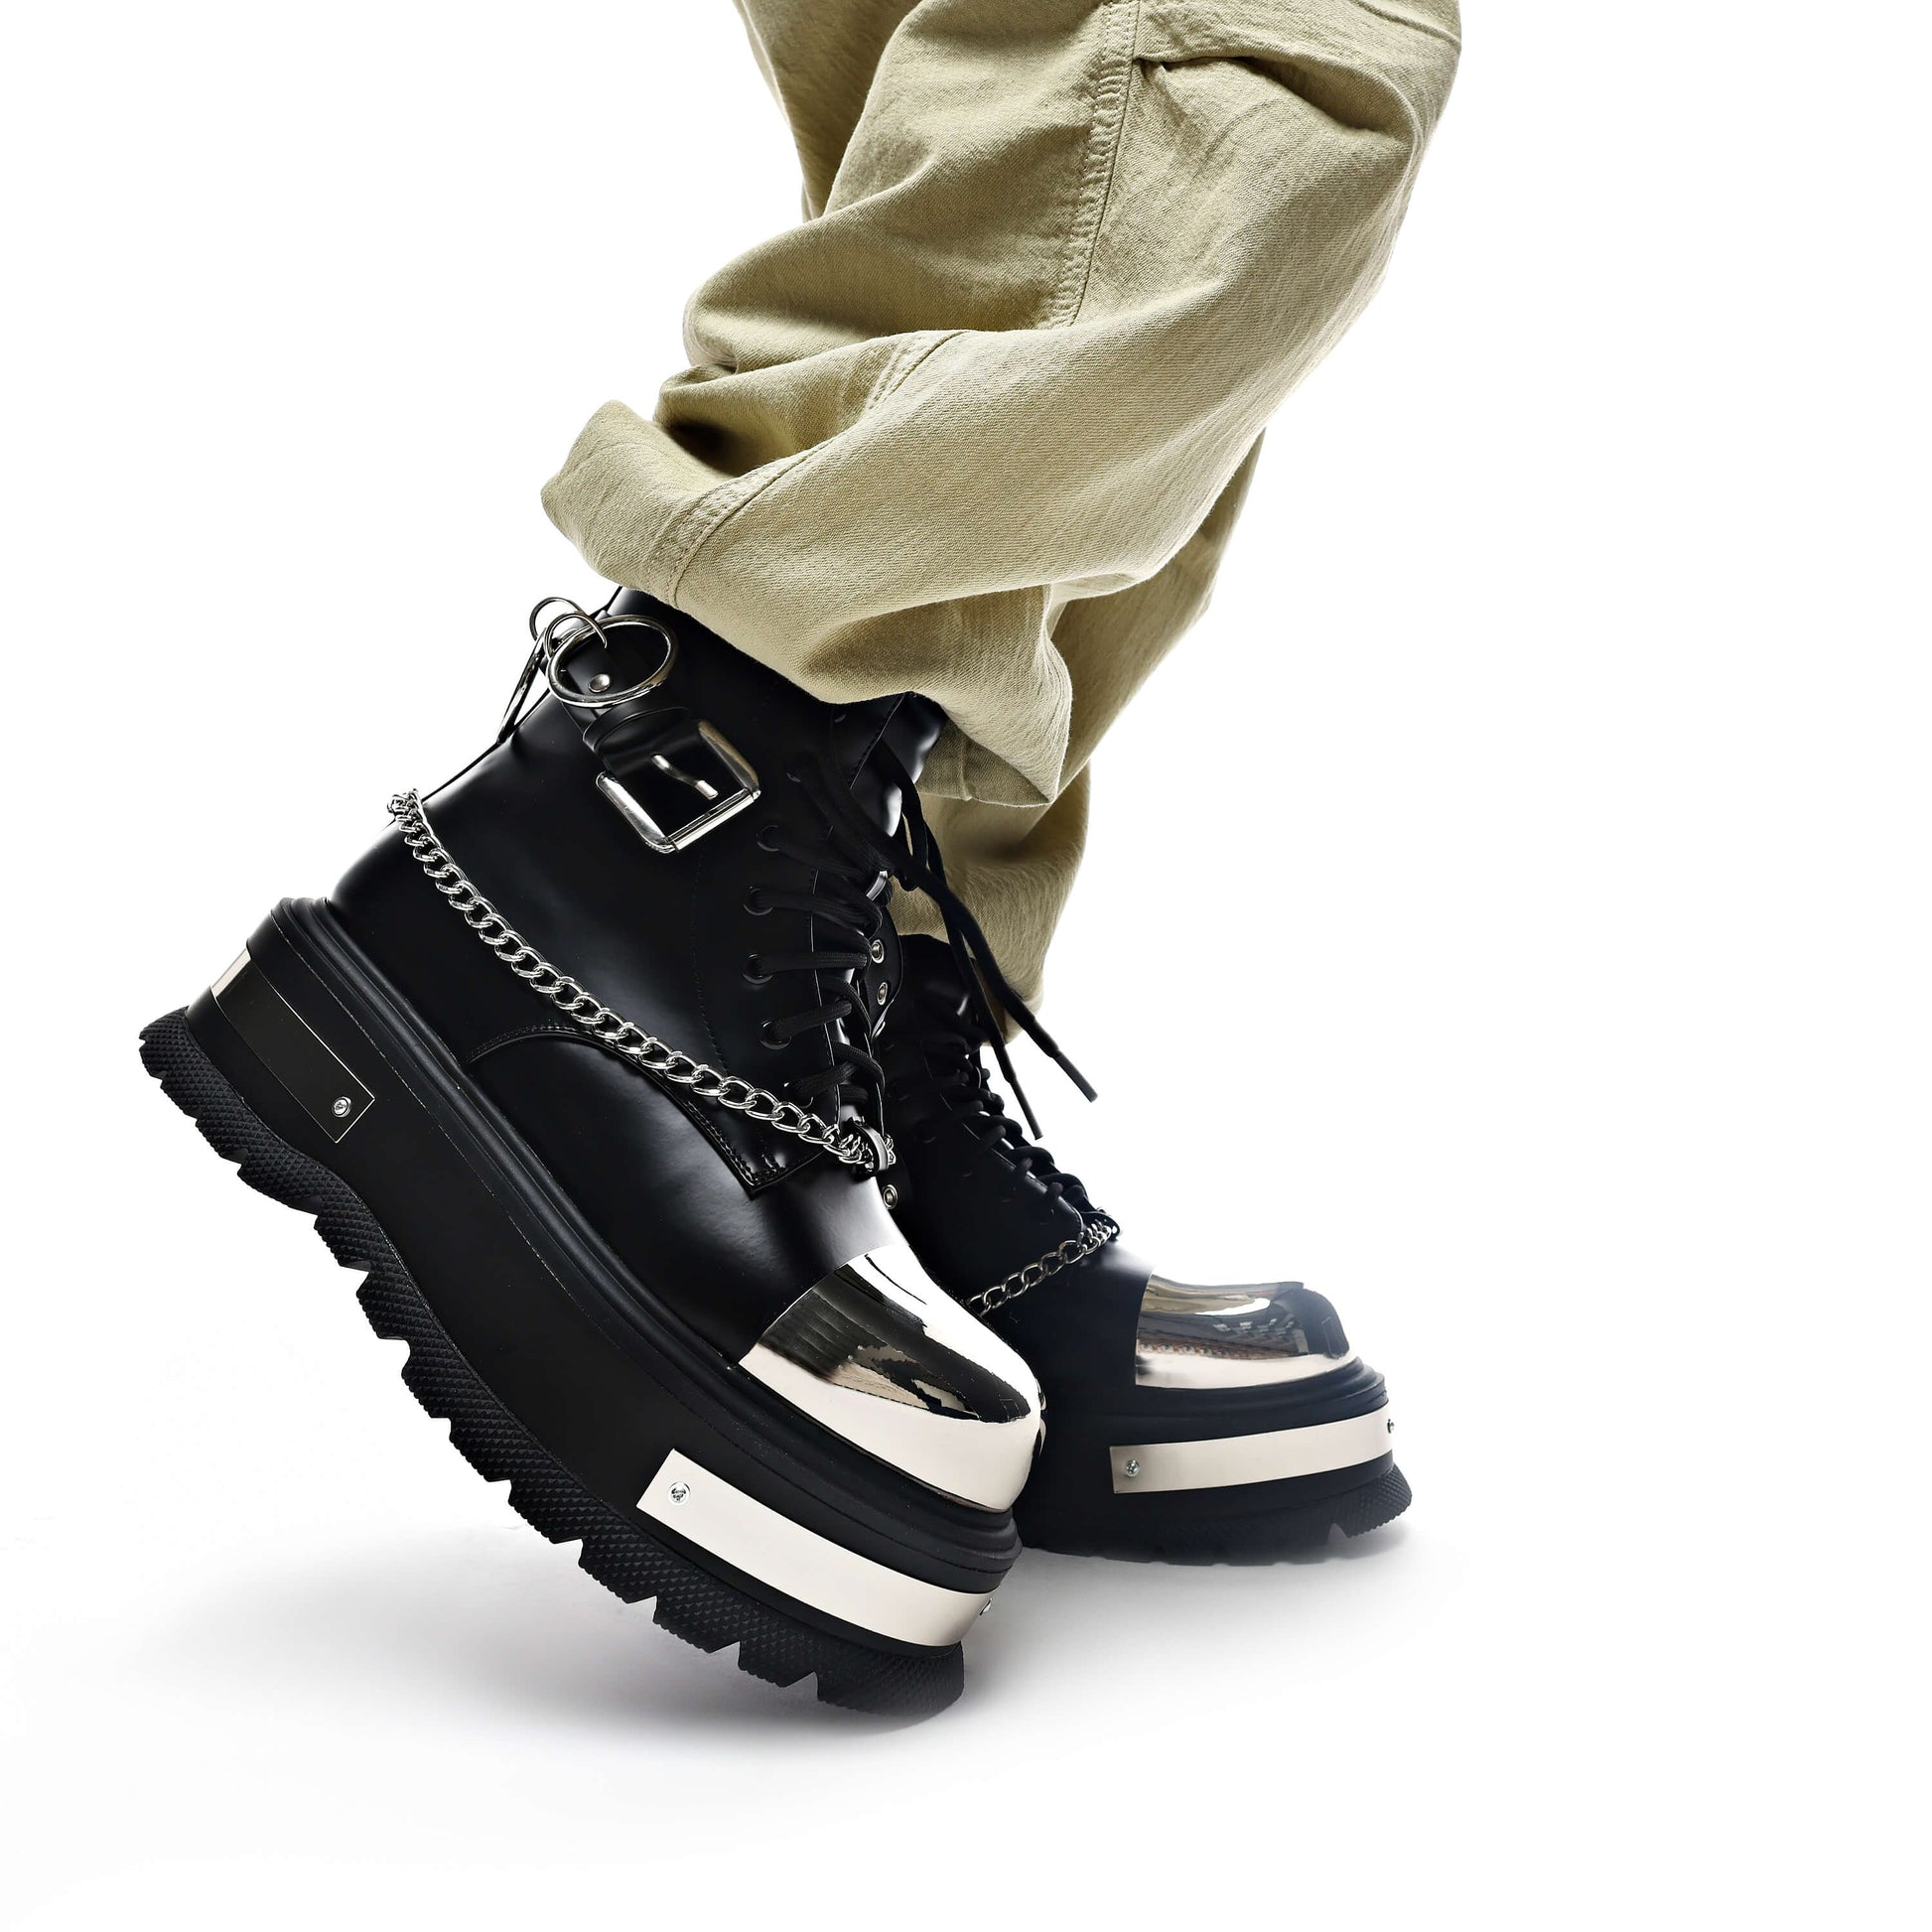 Borin Men's Hardware Platform Boots - Ankle Boots - KOI Footwear - Black - Model Right Side